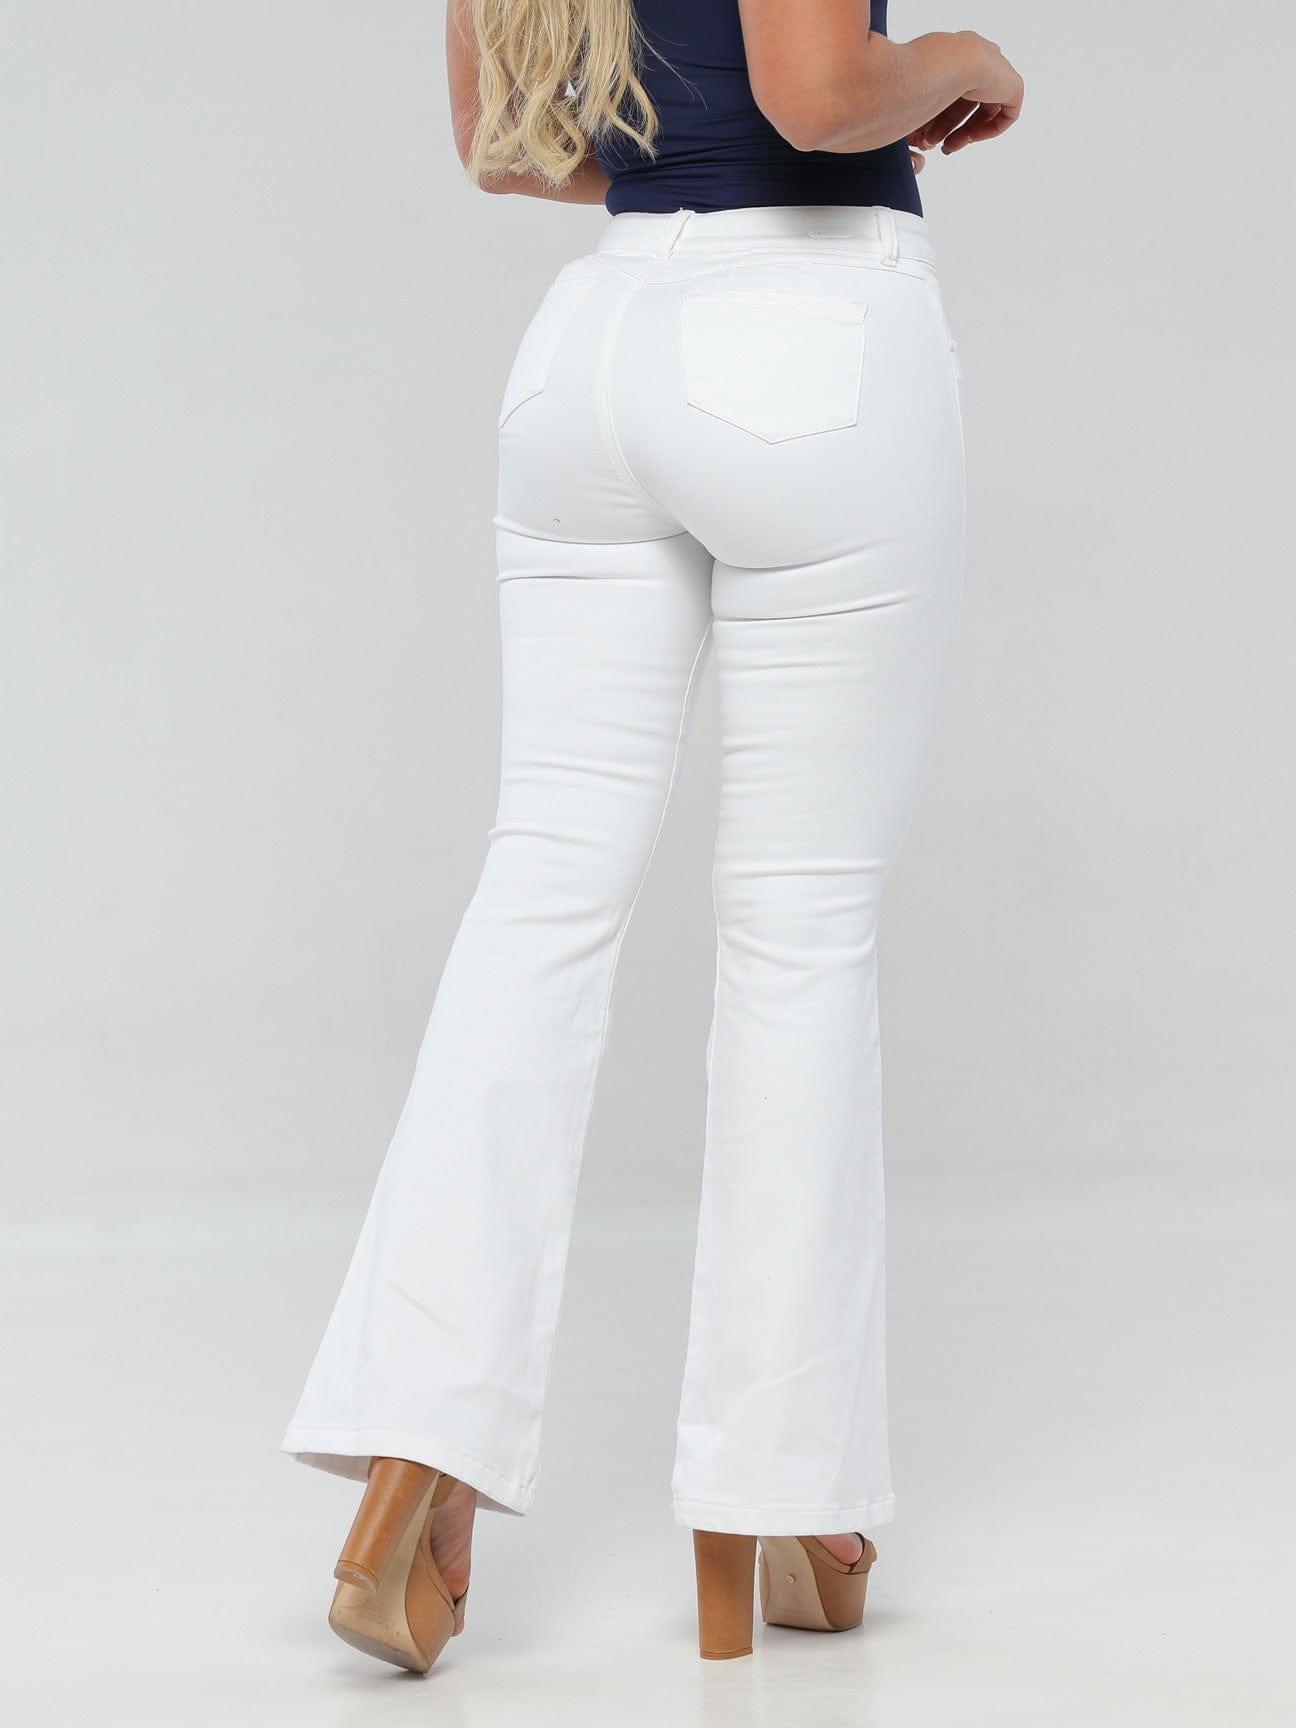 White Christmas Butt Lift Jeans 14233